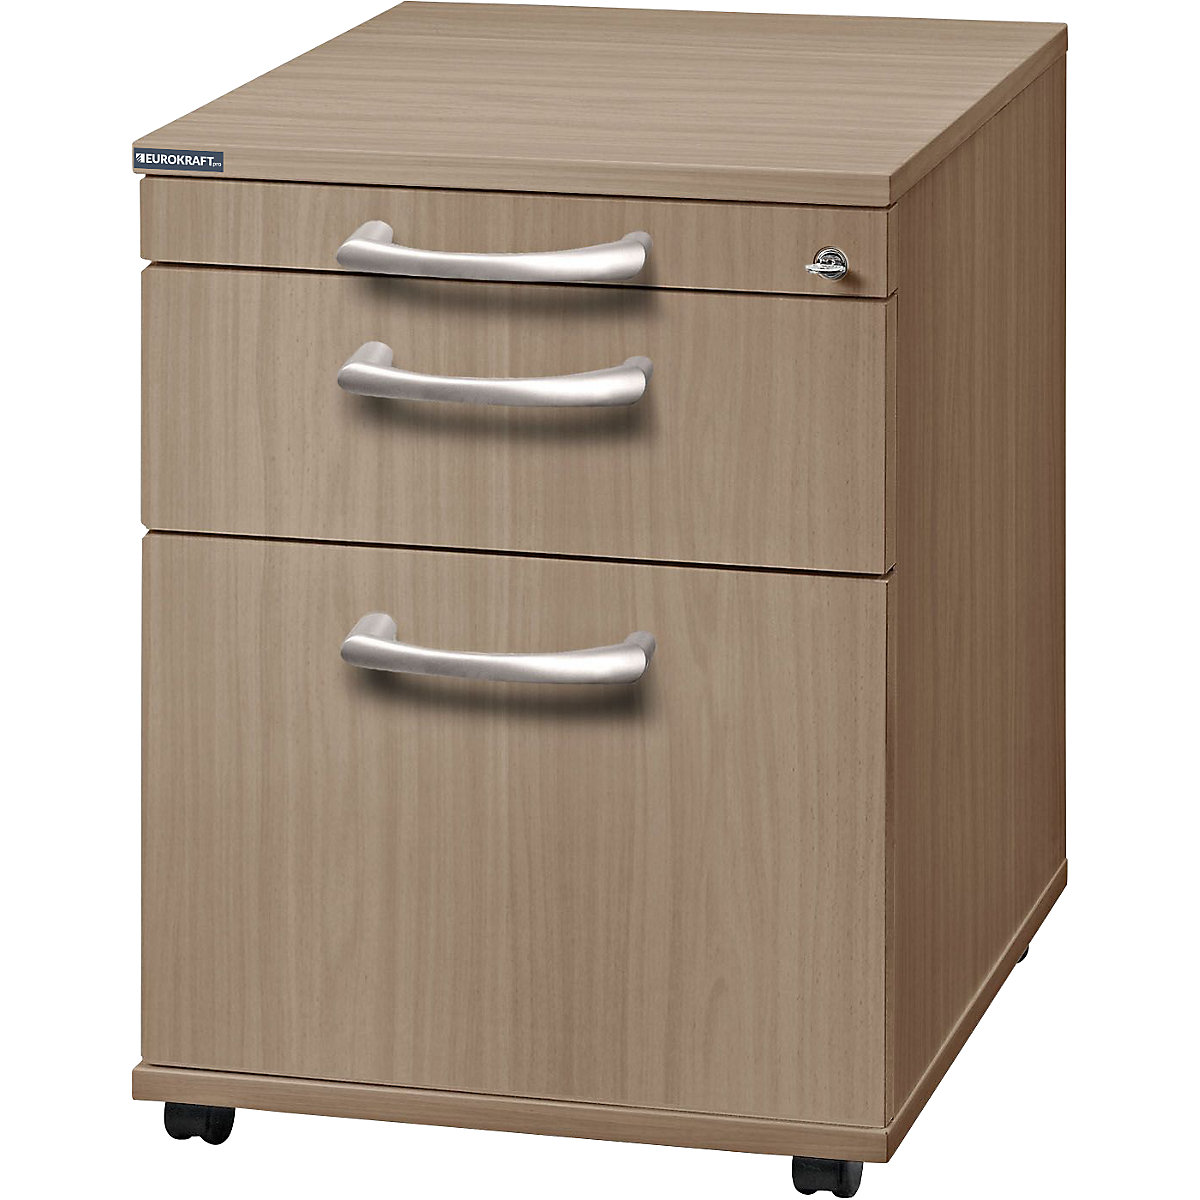 Mobile pedestal ANNY – eurokraft pro, 1 utensil drawer, 1 drawer, 1 file suspension drawer, depth 580 mm, walnut finish-6